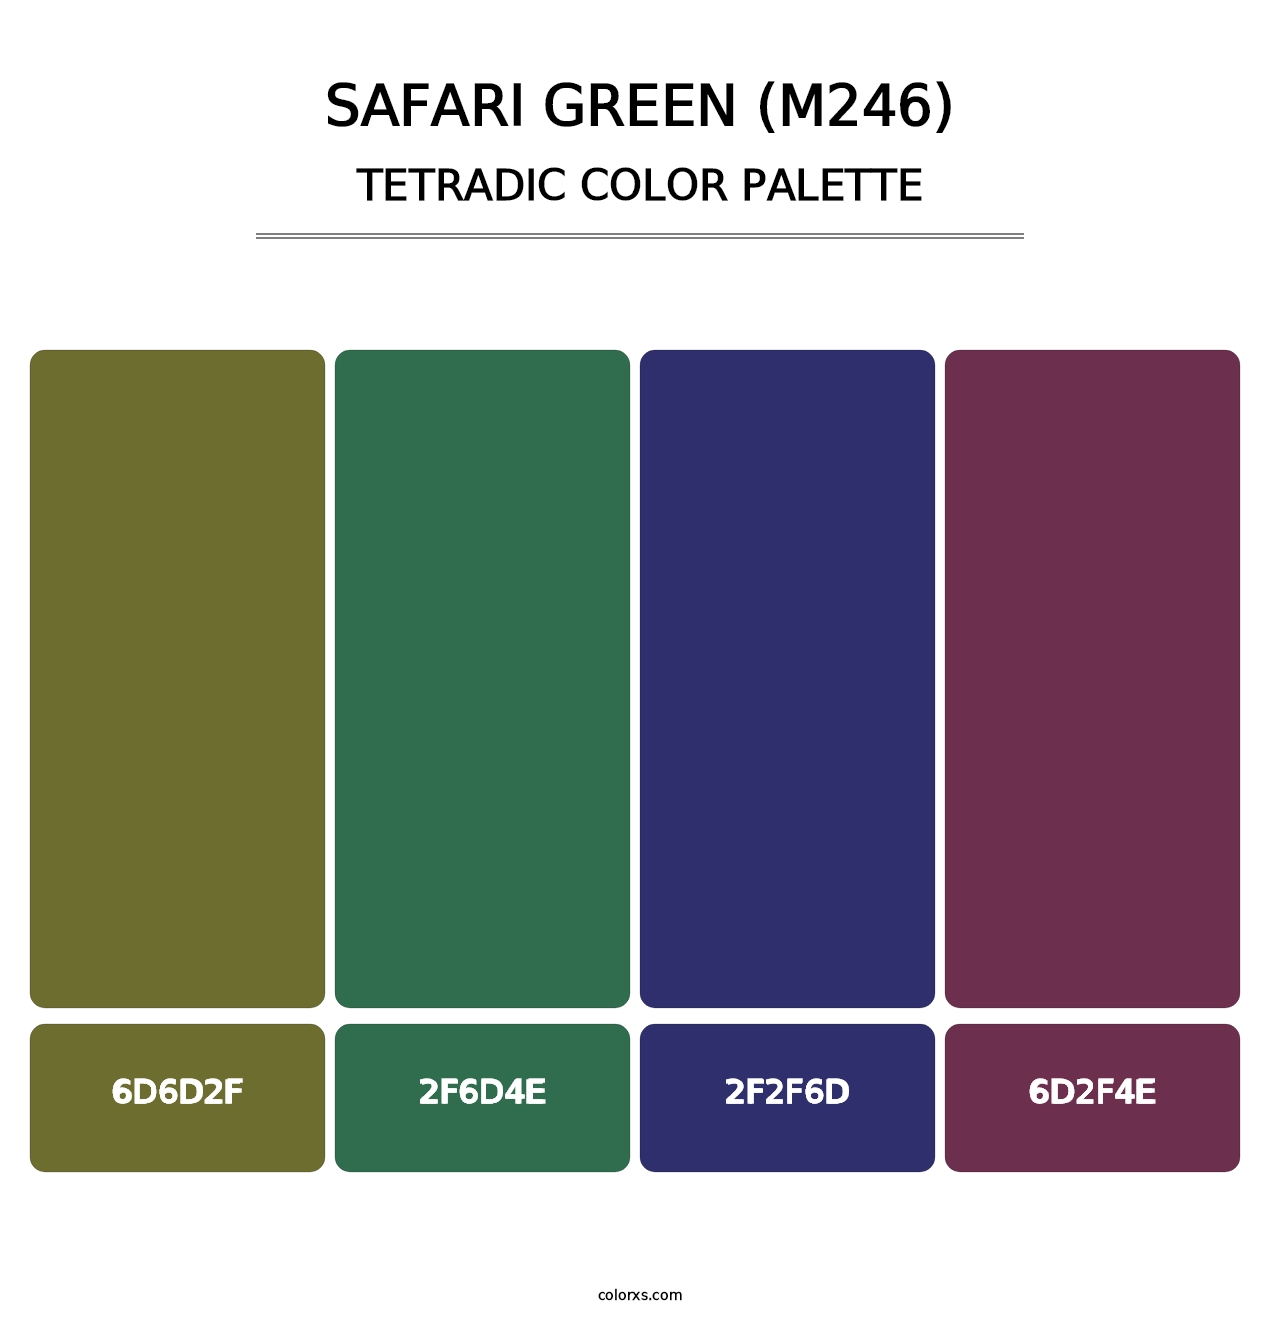 Safari Green (M246) - Tetradic Color Palette